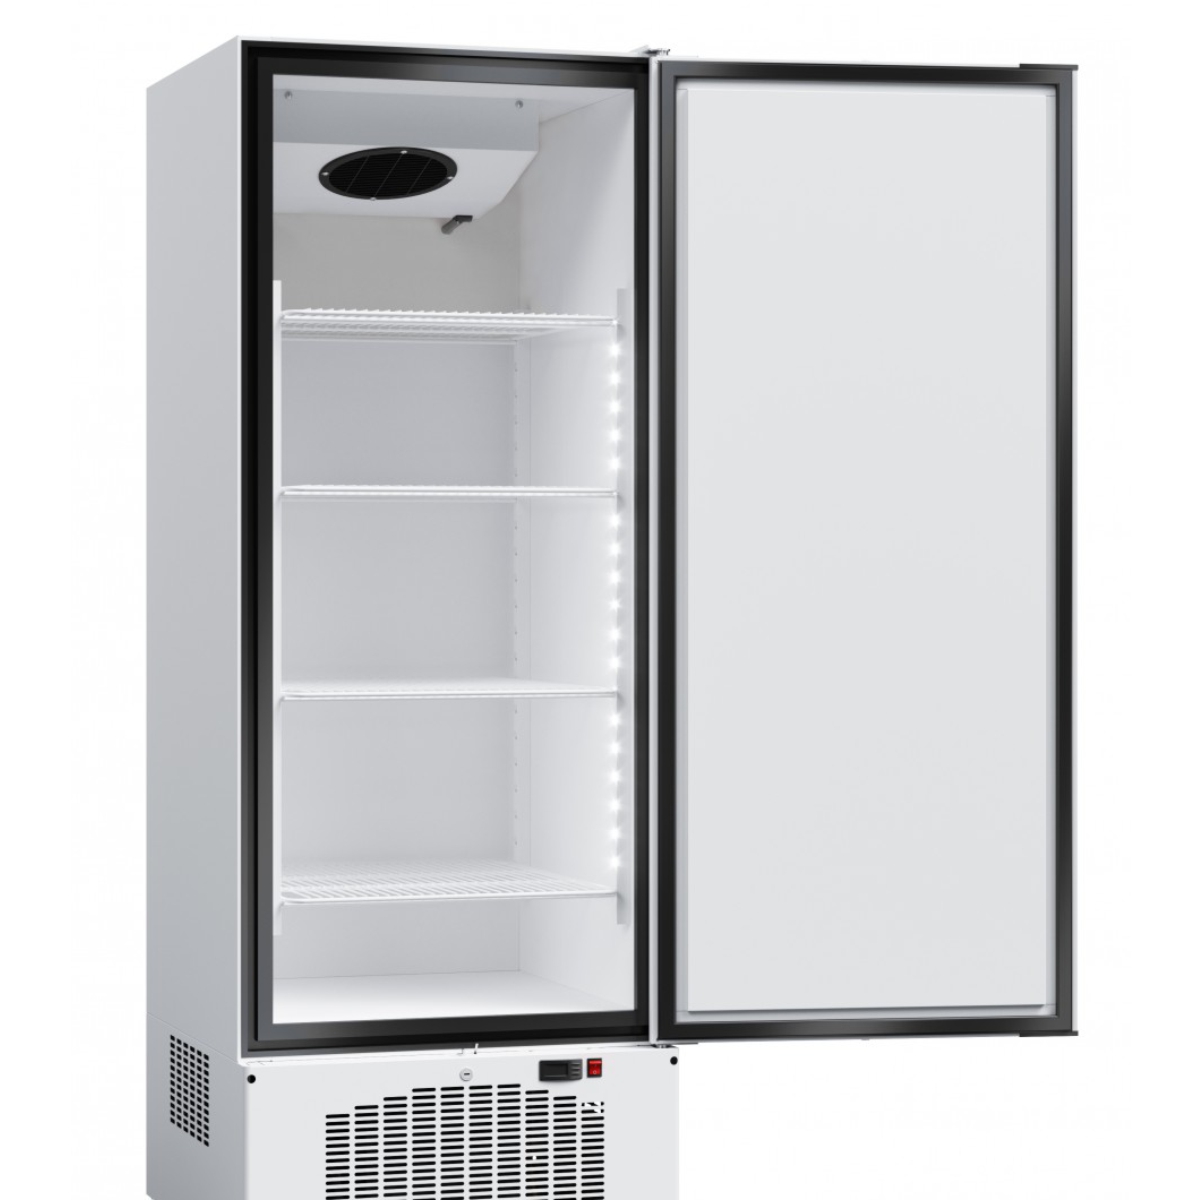 Холодильный шкаф abat. Шкаф холодильный Abat ШХС-0,5-01. Абат ШХН-0,5-01 морозильный шкаф. Шкаф холодильный Abat ШХС-0,7-02 краш. Нижний агрегат. Шкаф морозильный Abat ШХН-1,0.